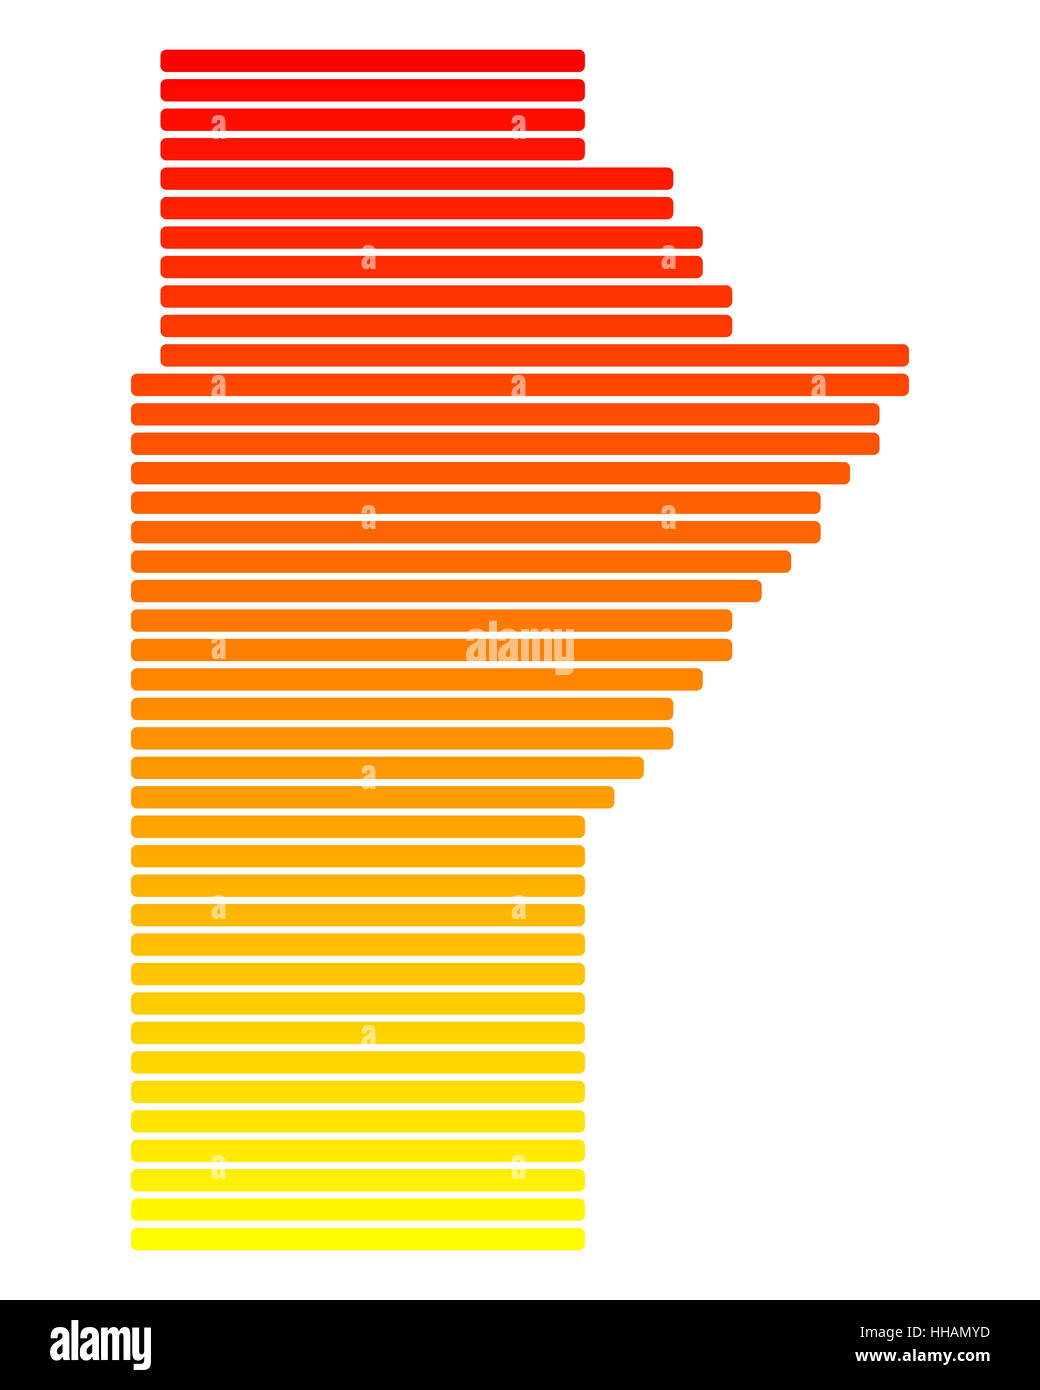 Manitoba Population Density Map